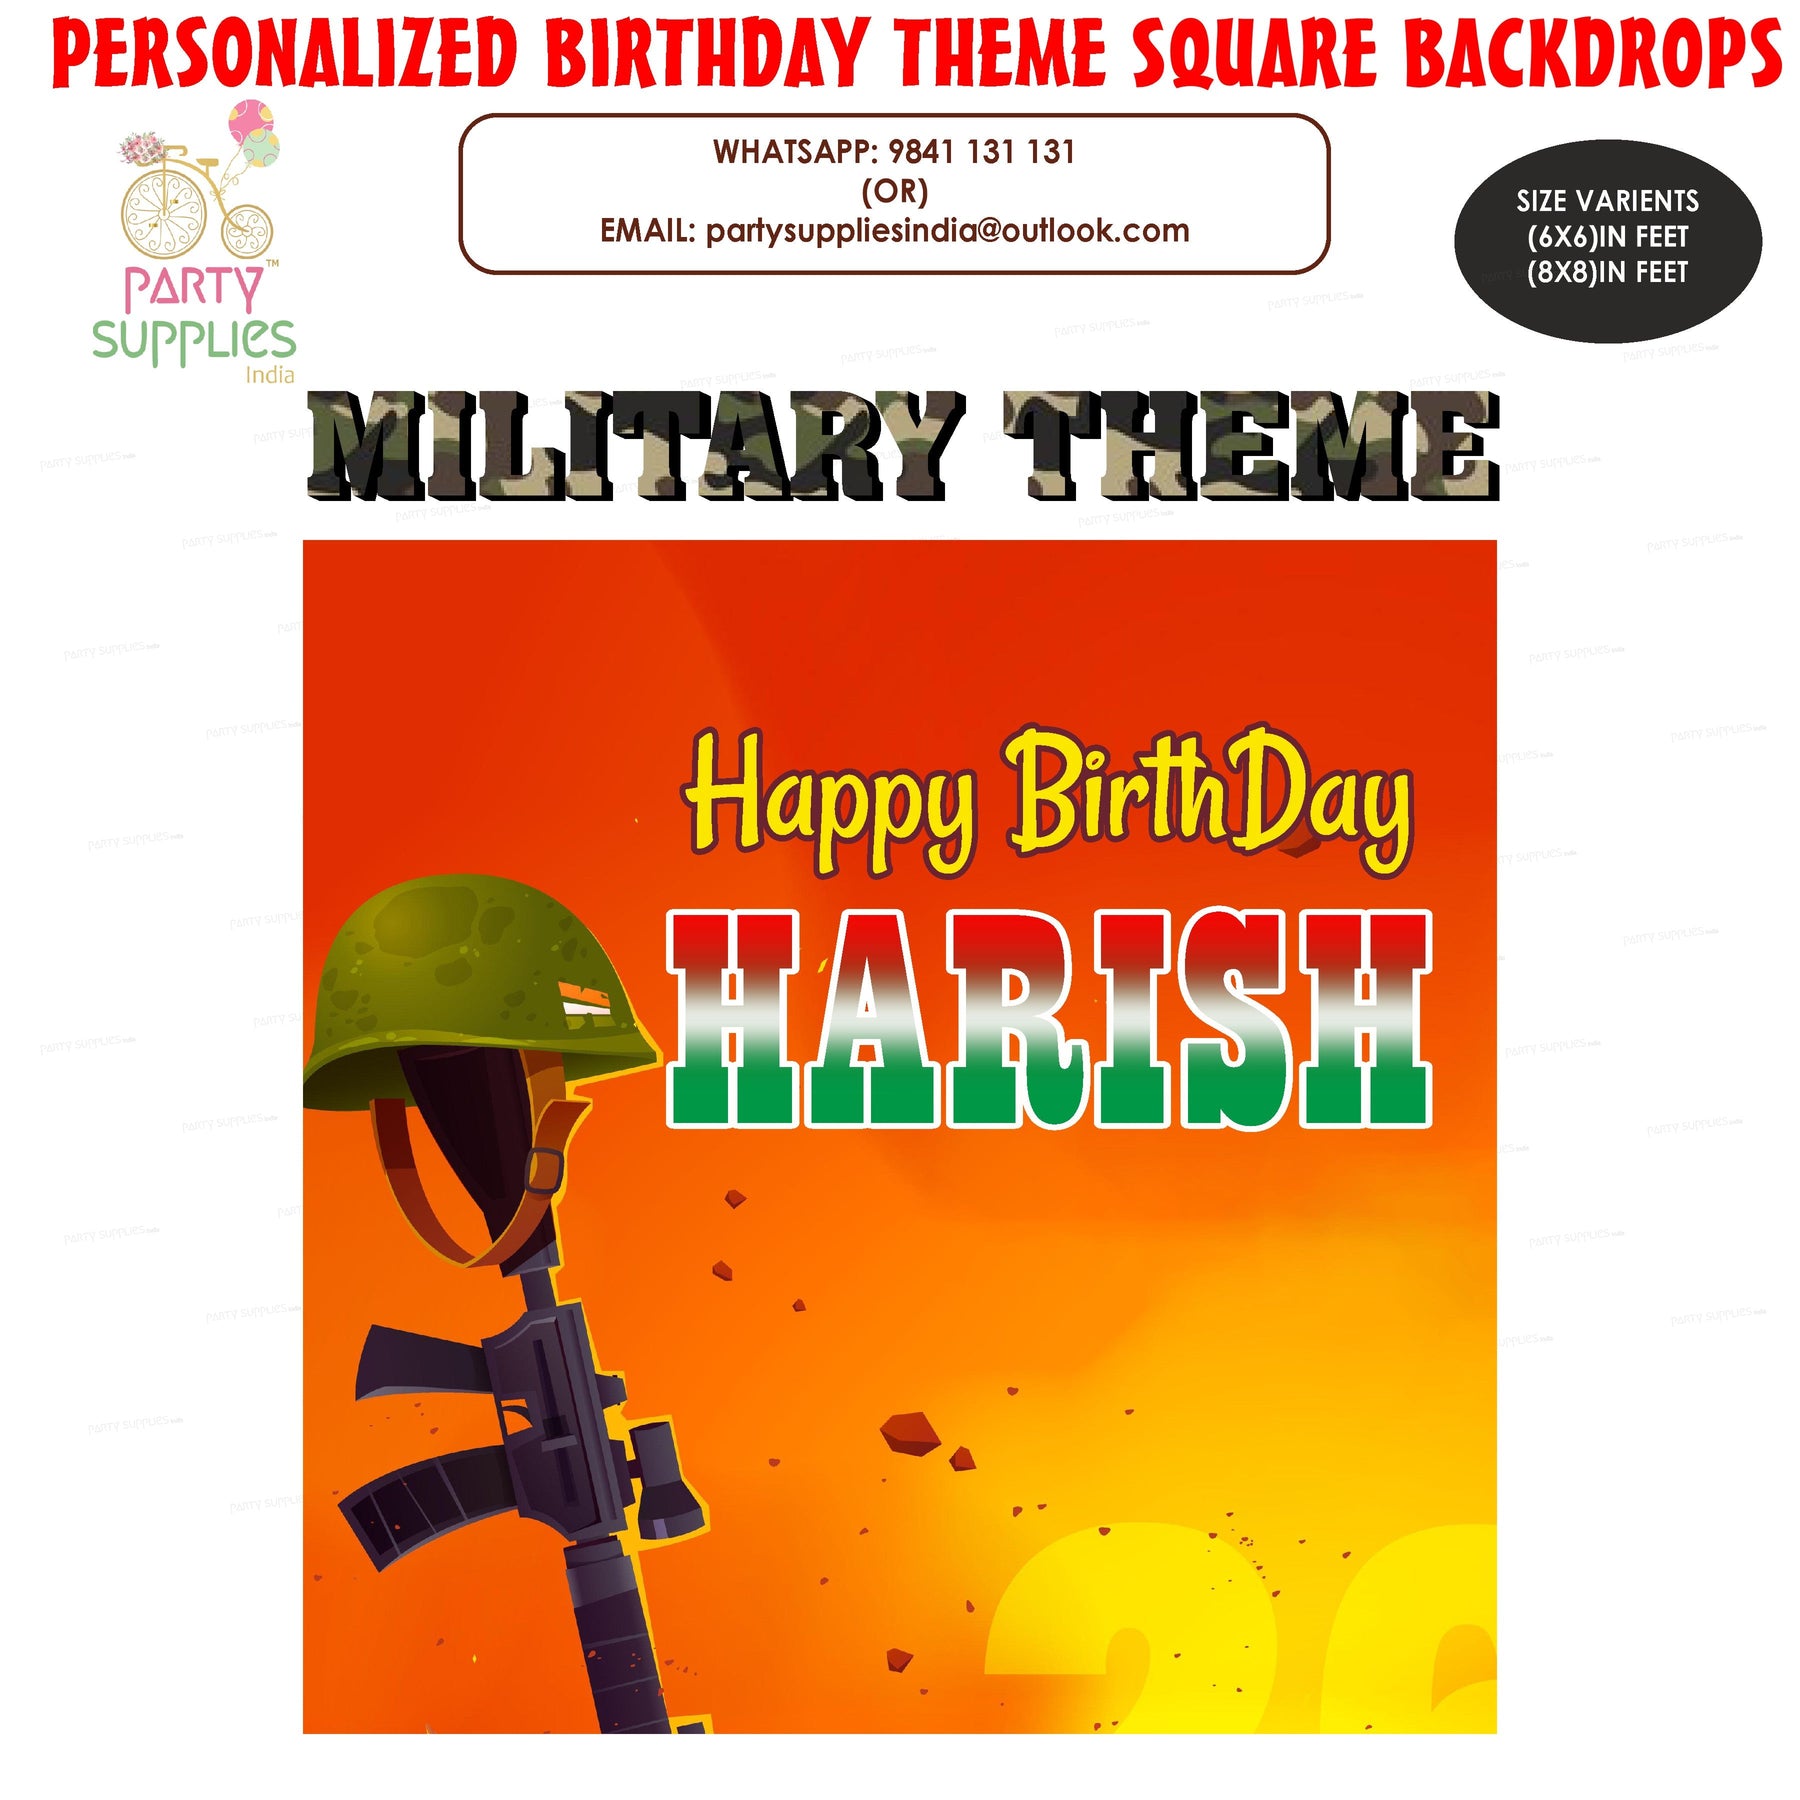 PSI Military Theme Personalized Square Backdrop